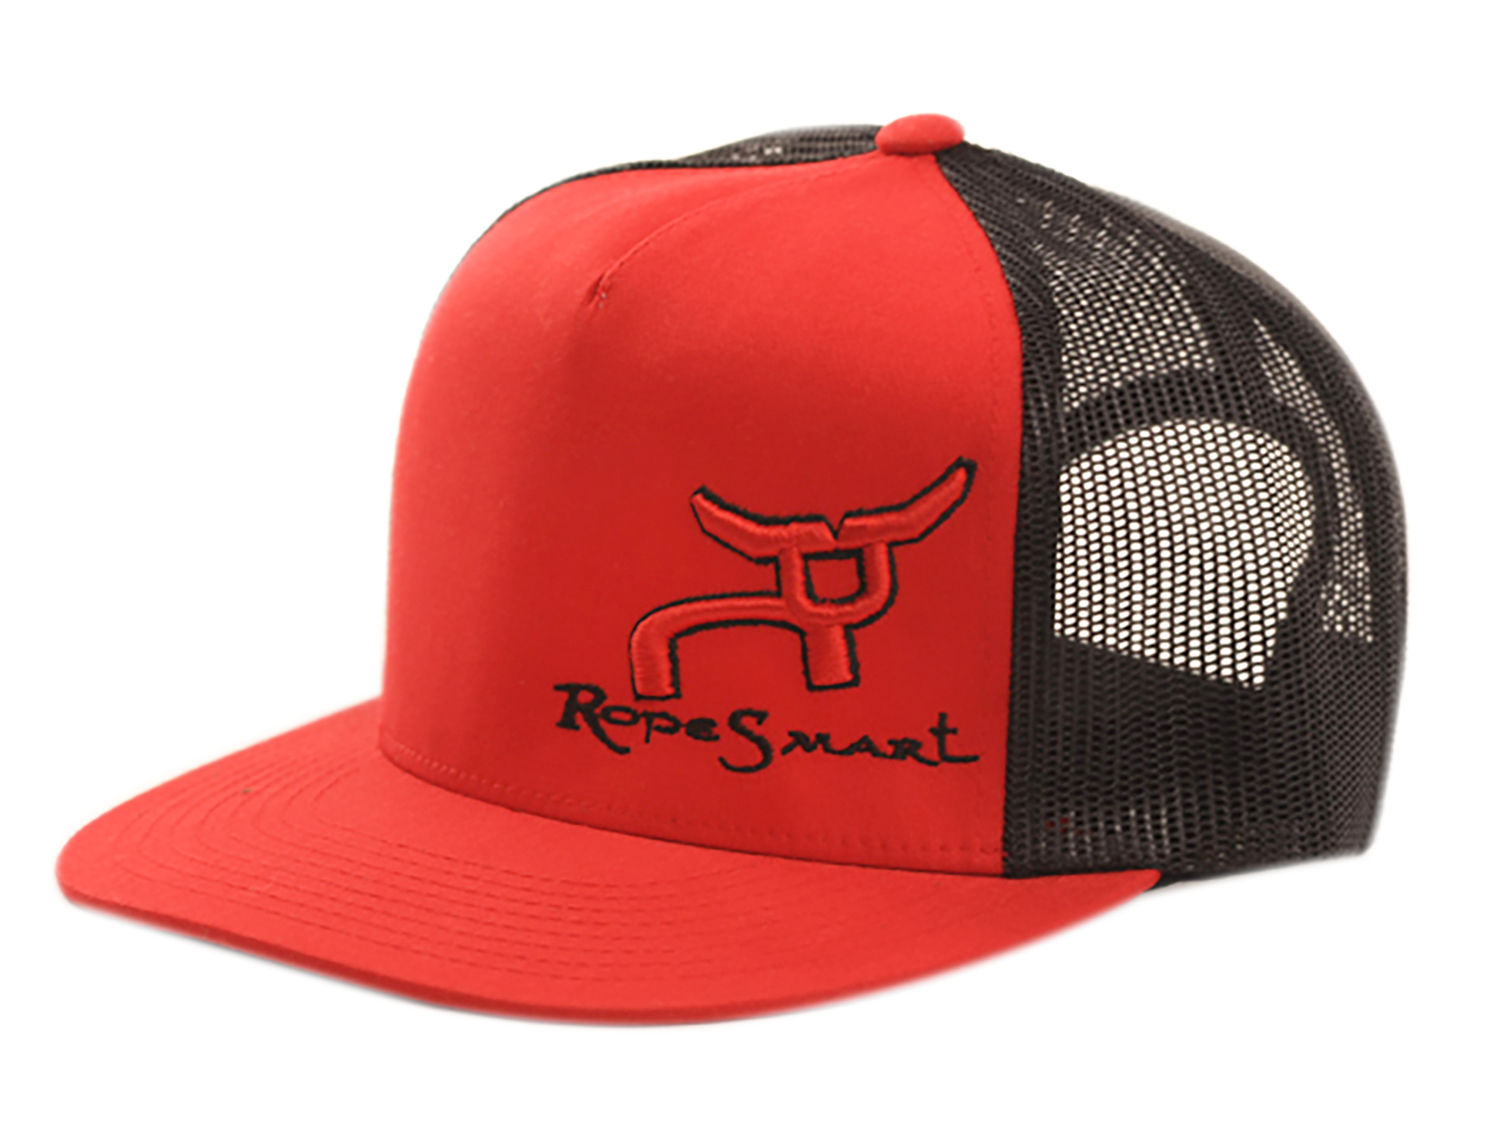 RS Trucker Red & Black Snapback Cap